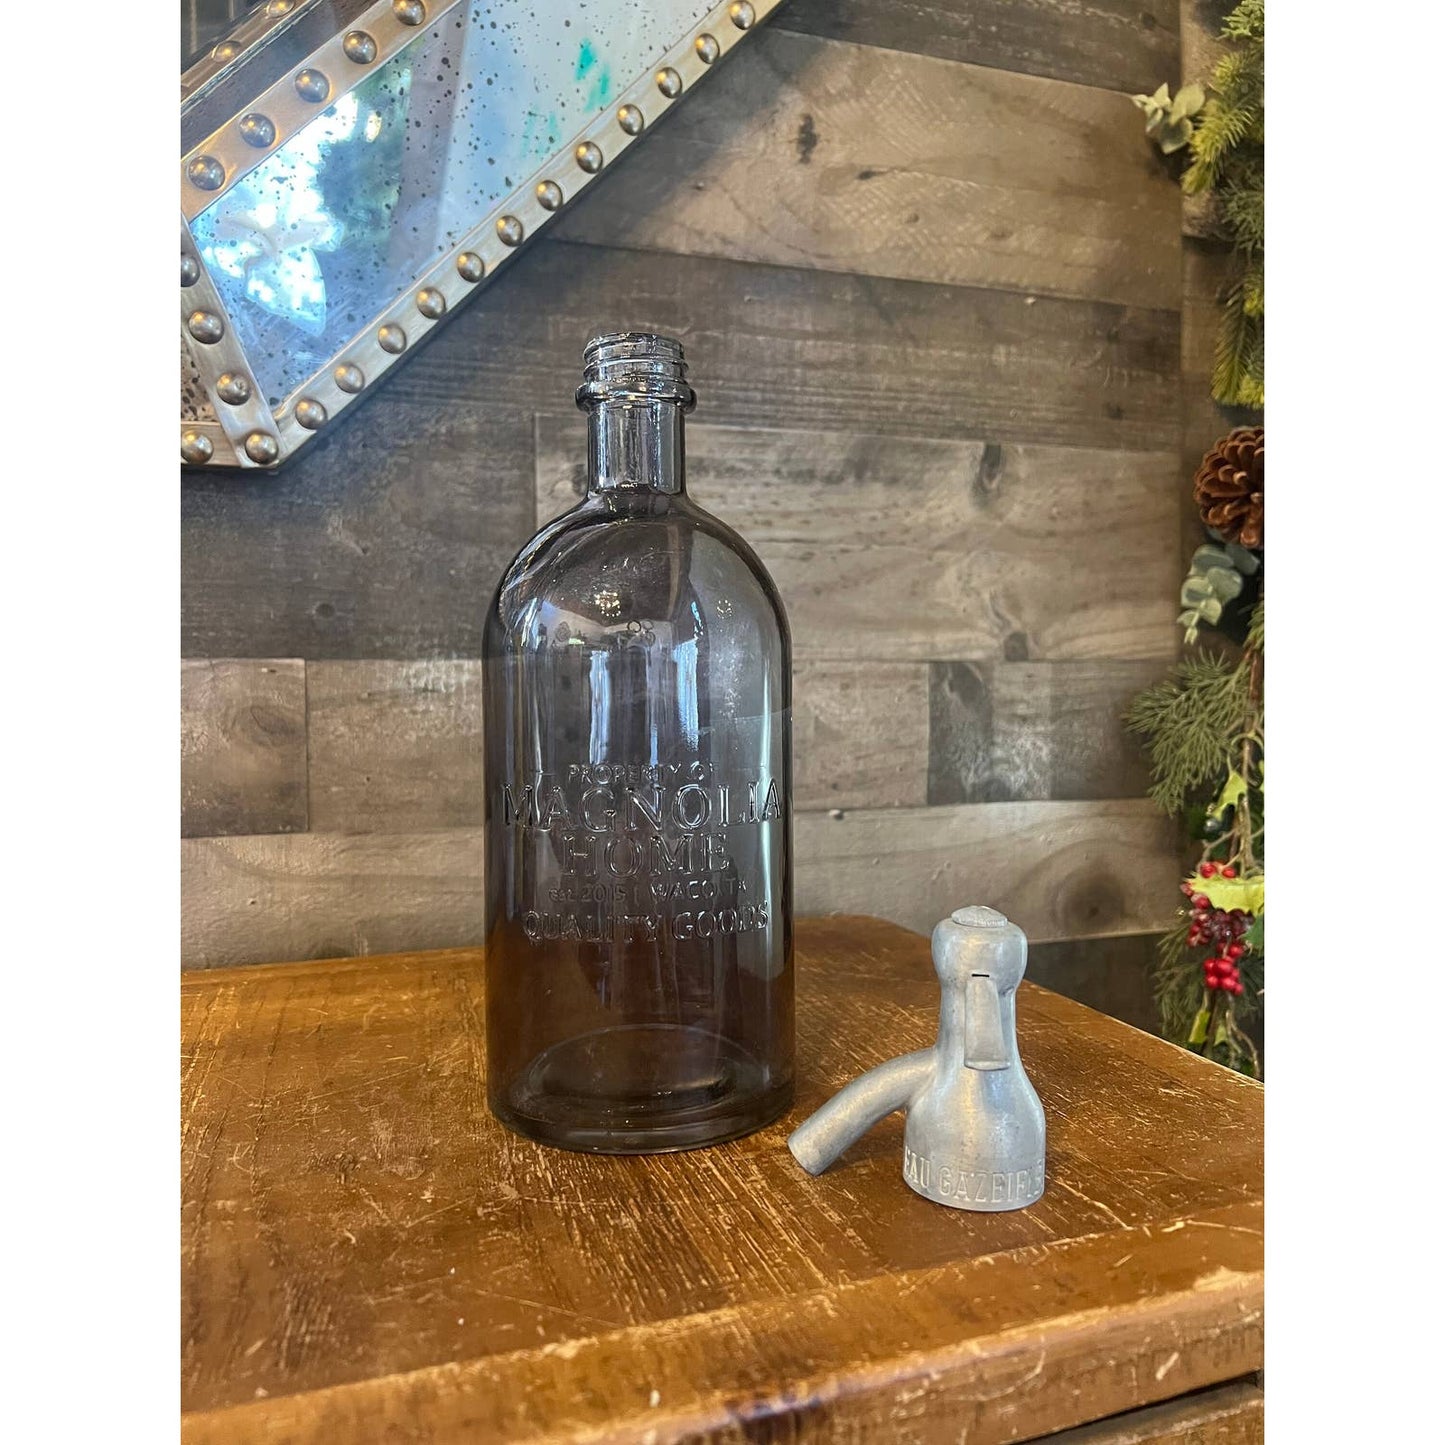 Magnolia Glass Bottle